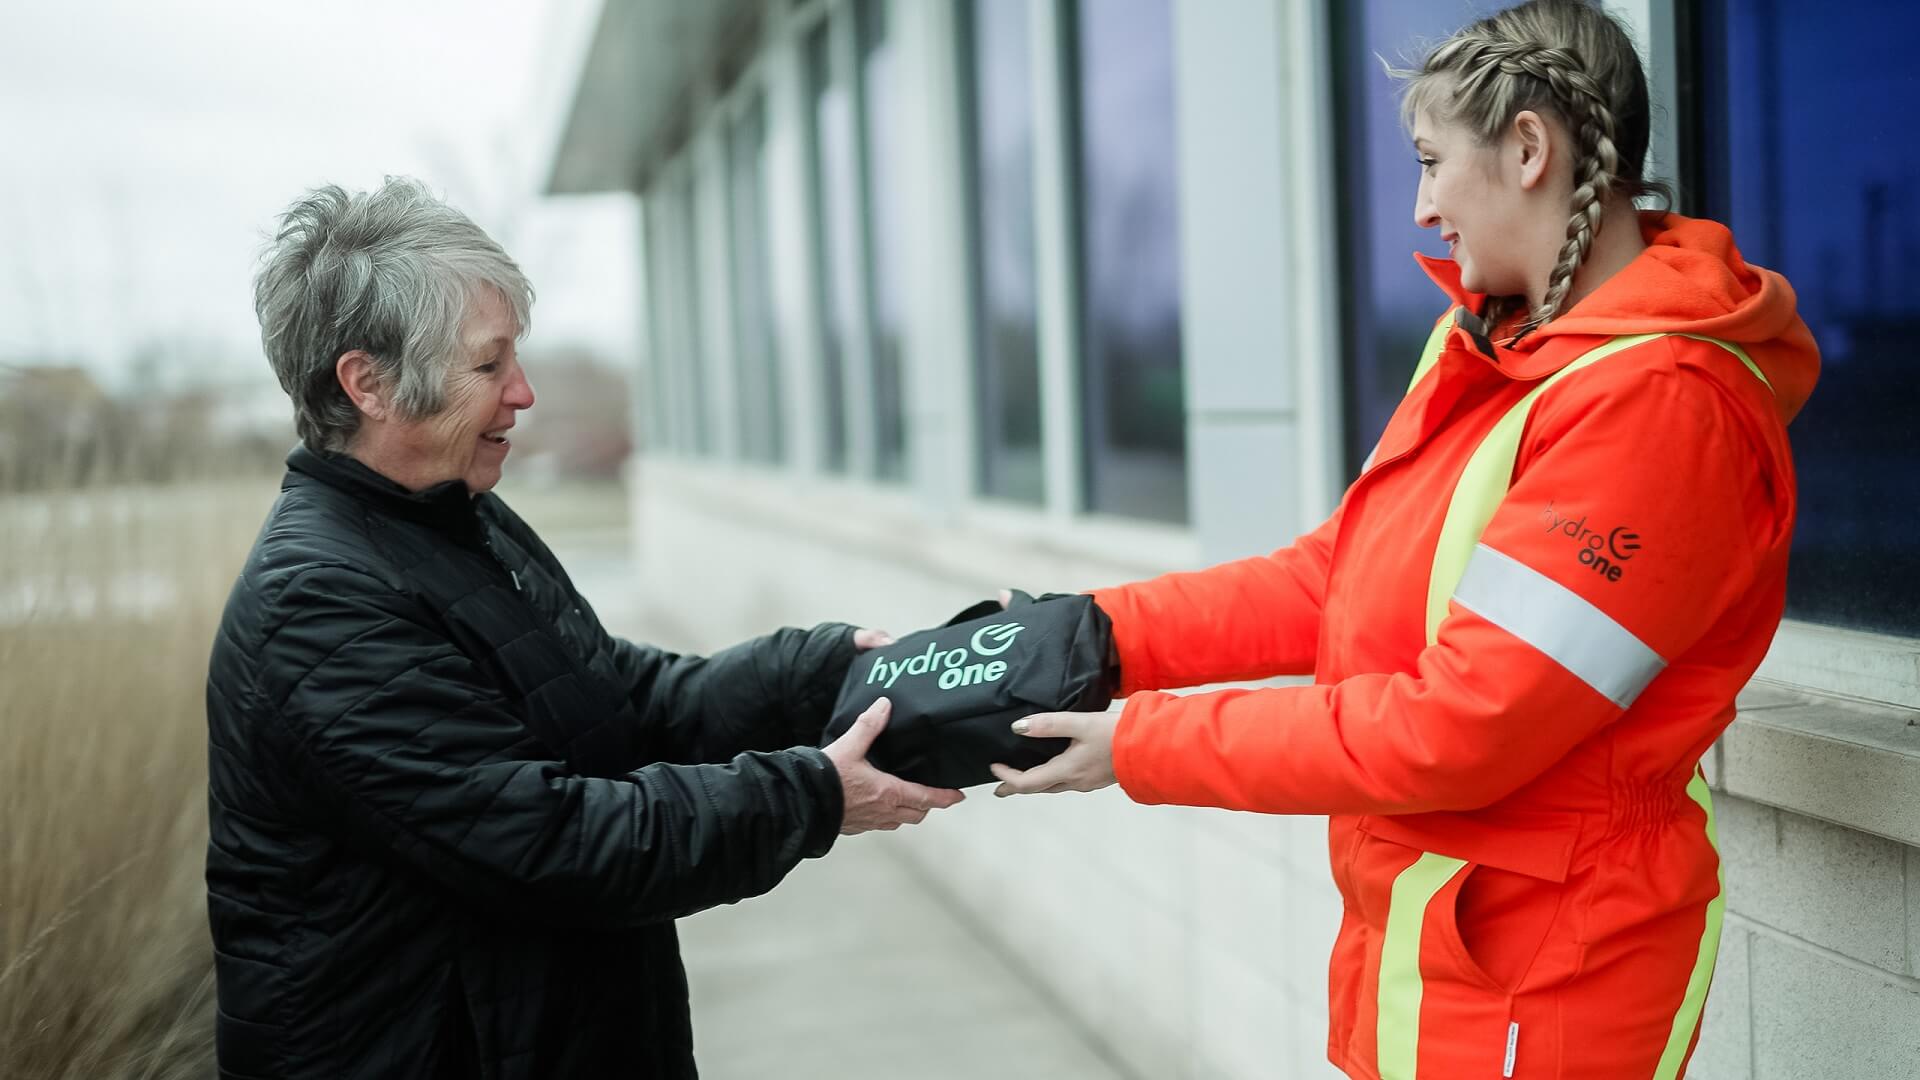 Image of Hydro One employee handing customer an emergency preparedness kit